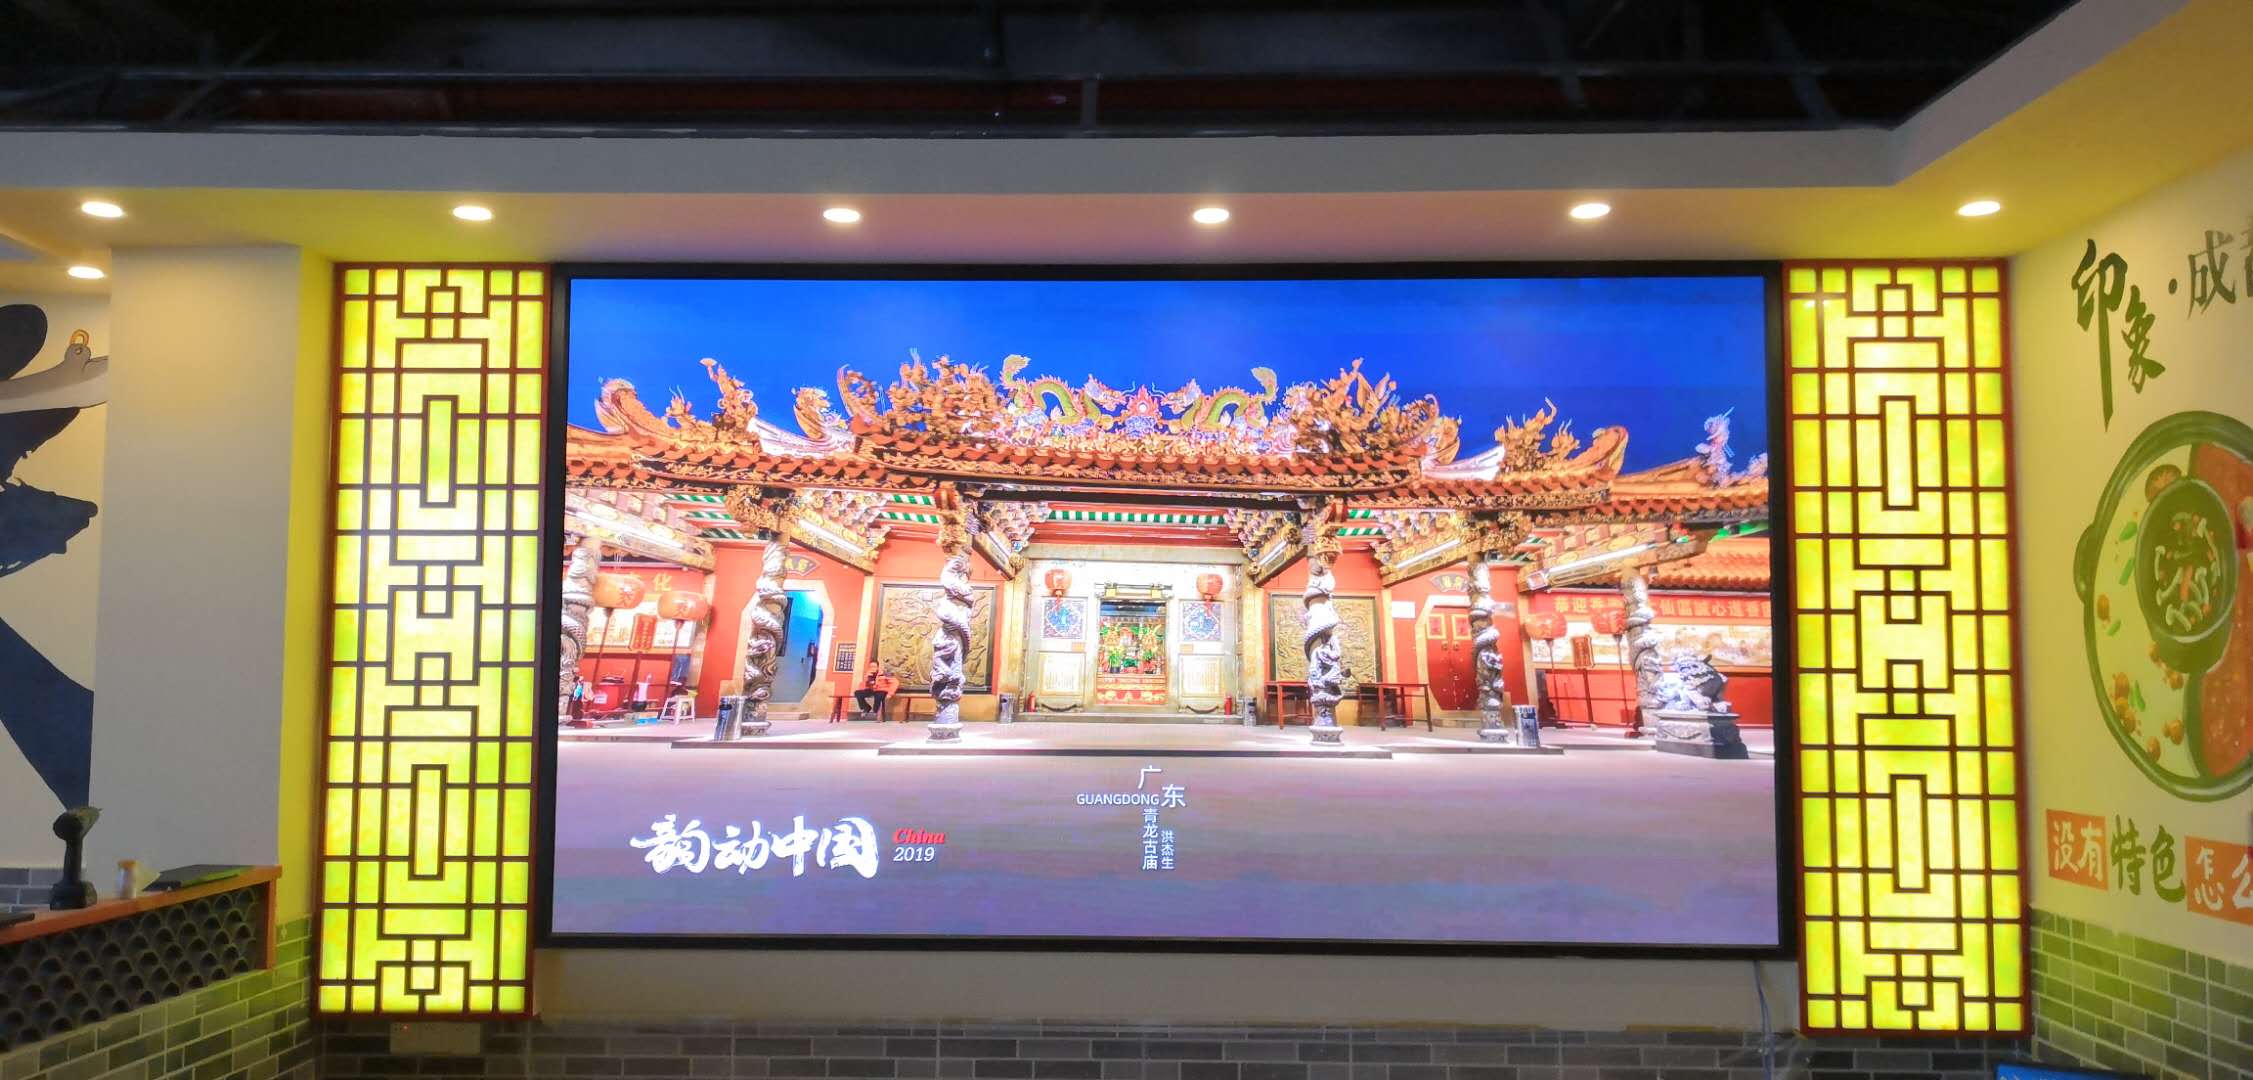 P2.5全彩LED显示屏-壁挂支架-深圳市宝安区印象成都老火锅